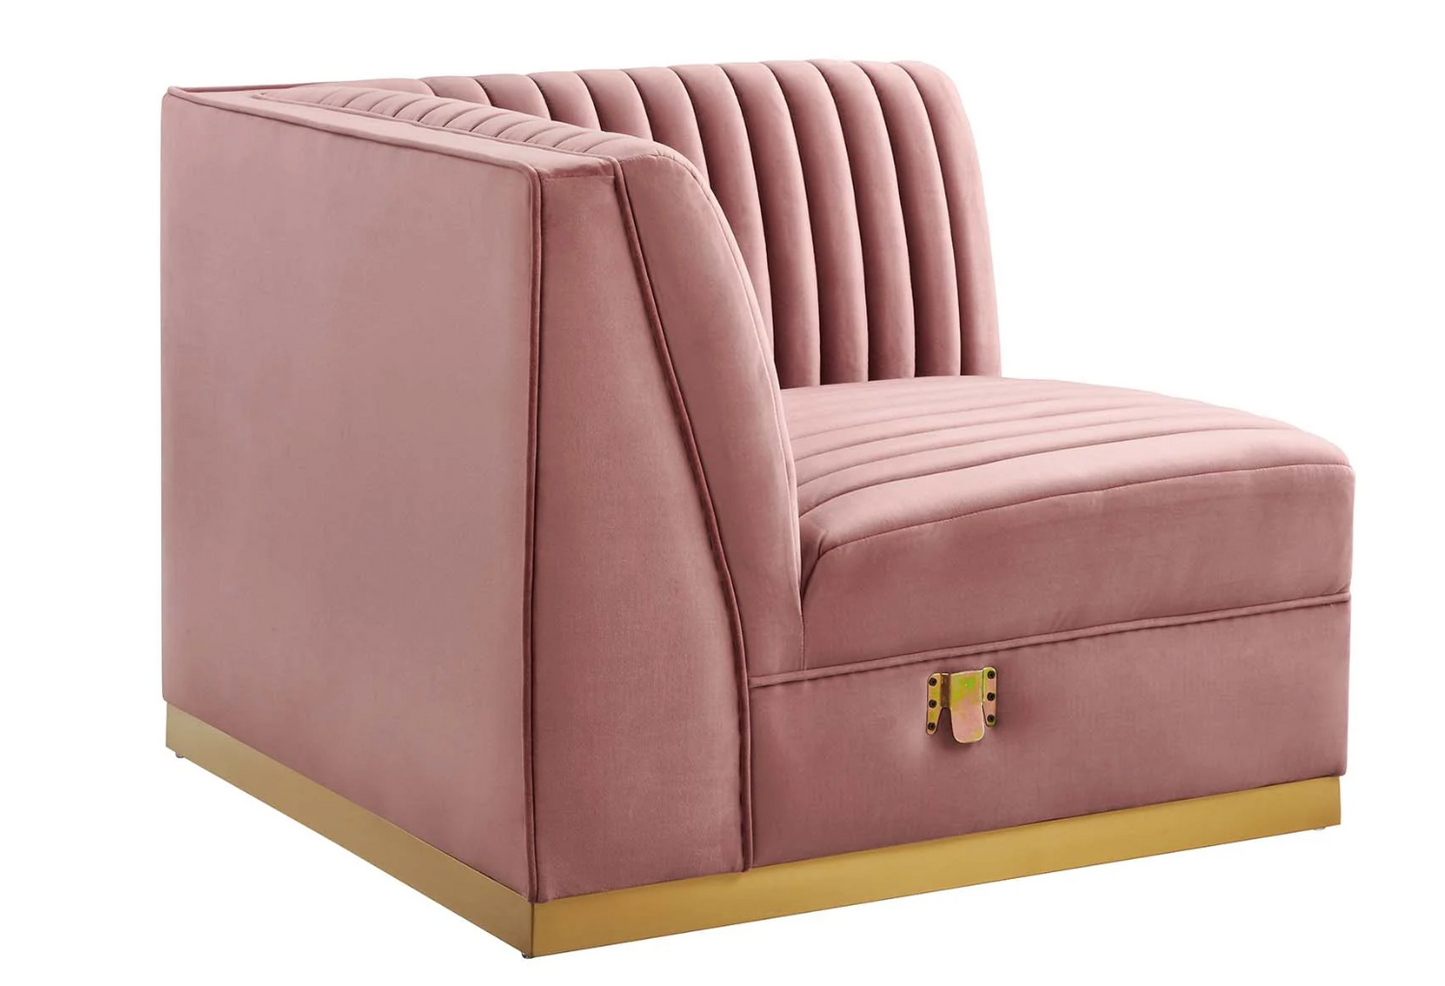 Channel Tufted Blush Pink Velvet Sectional Sofa Corner Chair